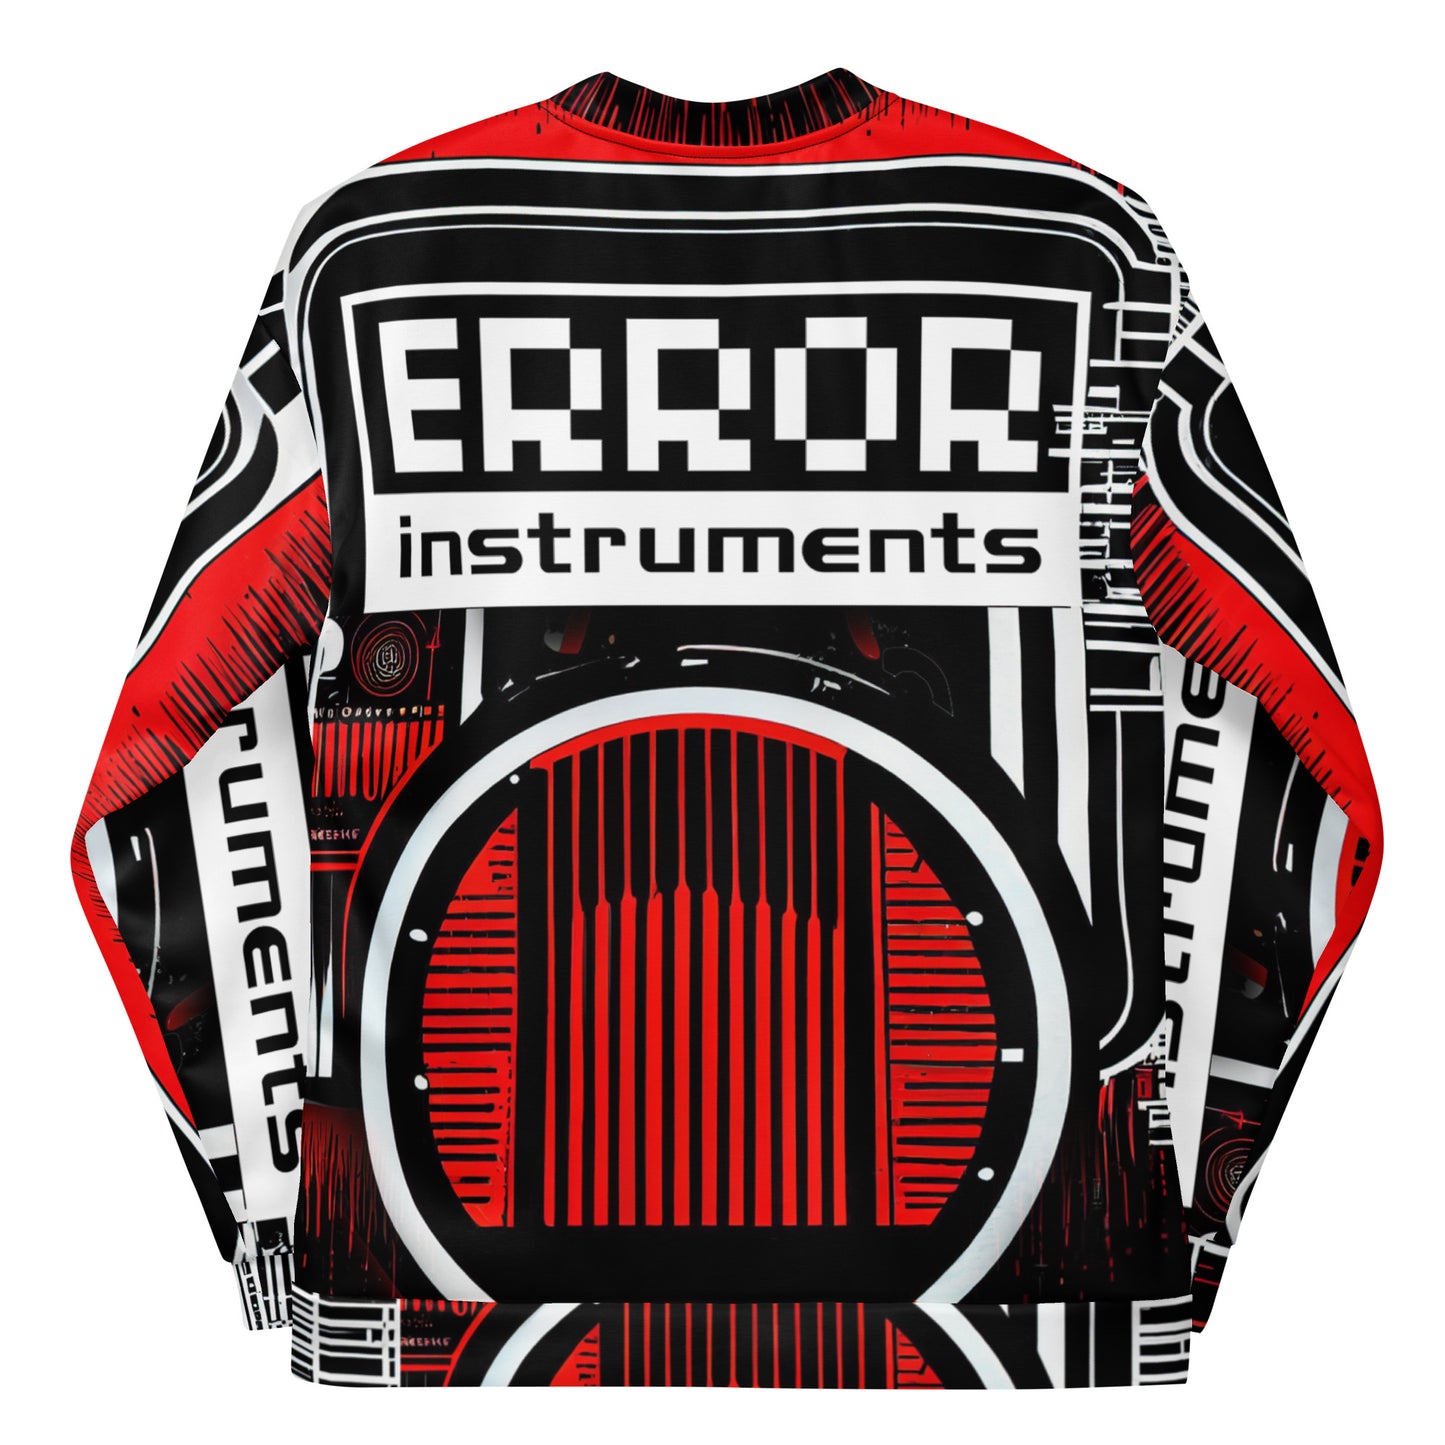 Error Instruments Unisex  Racing Jacket - Stagefashion / Clubwear / Streetwear